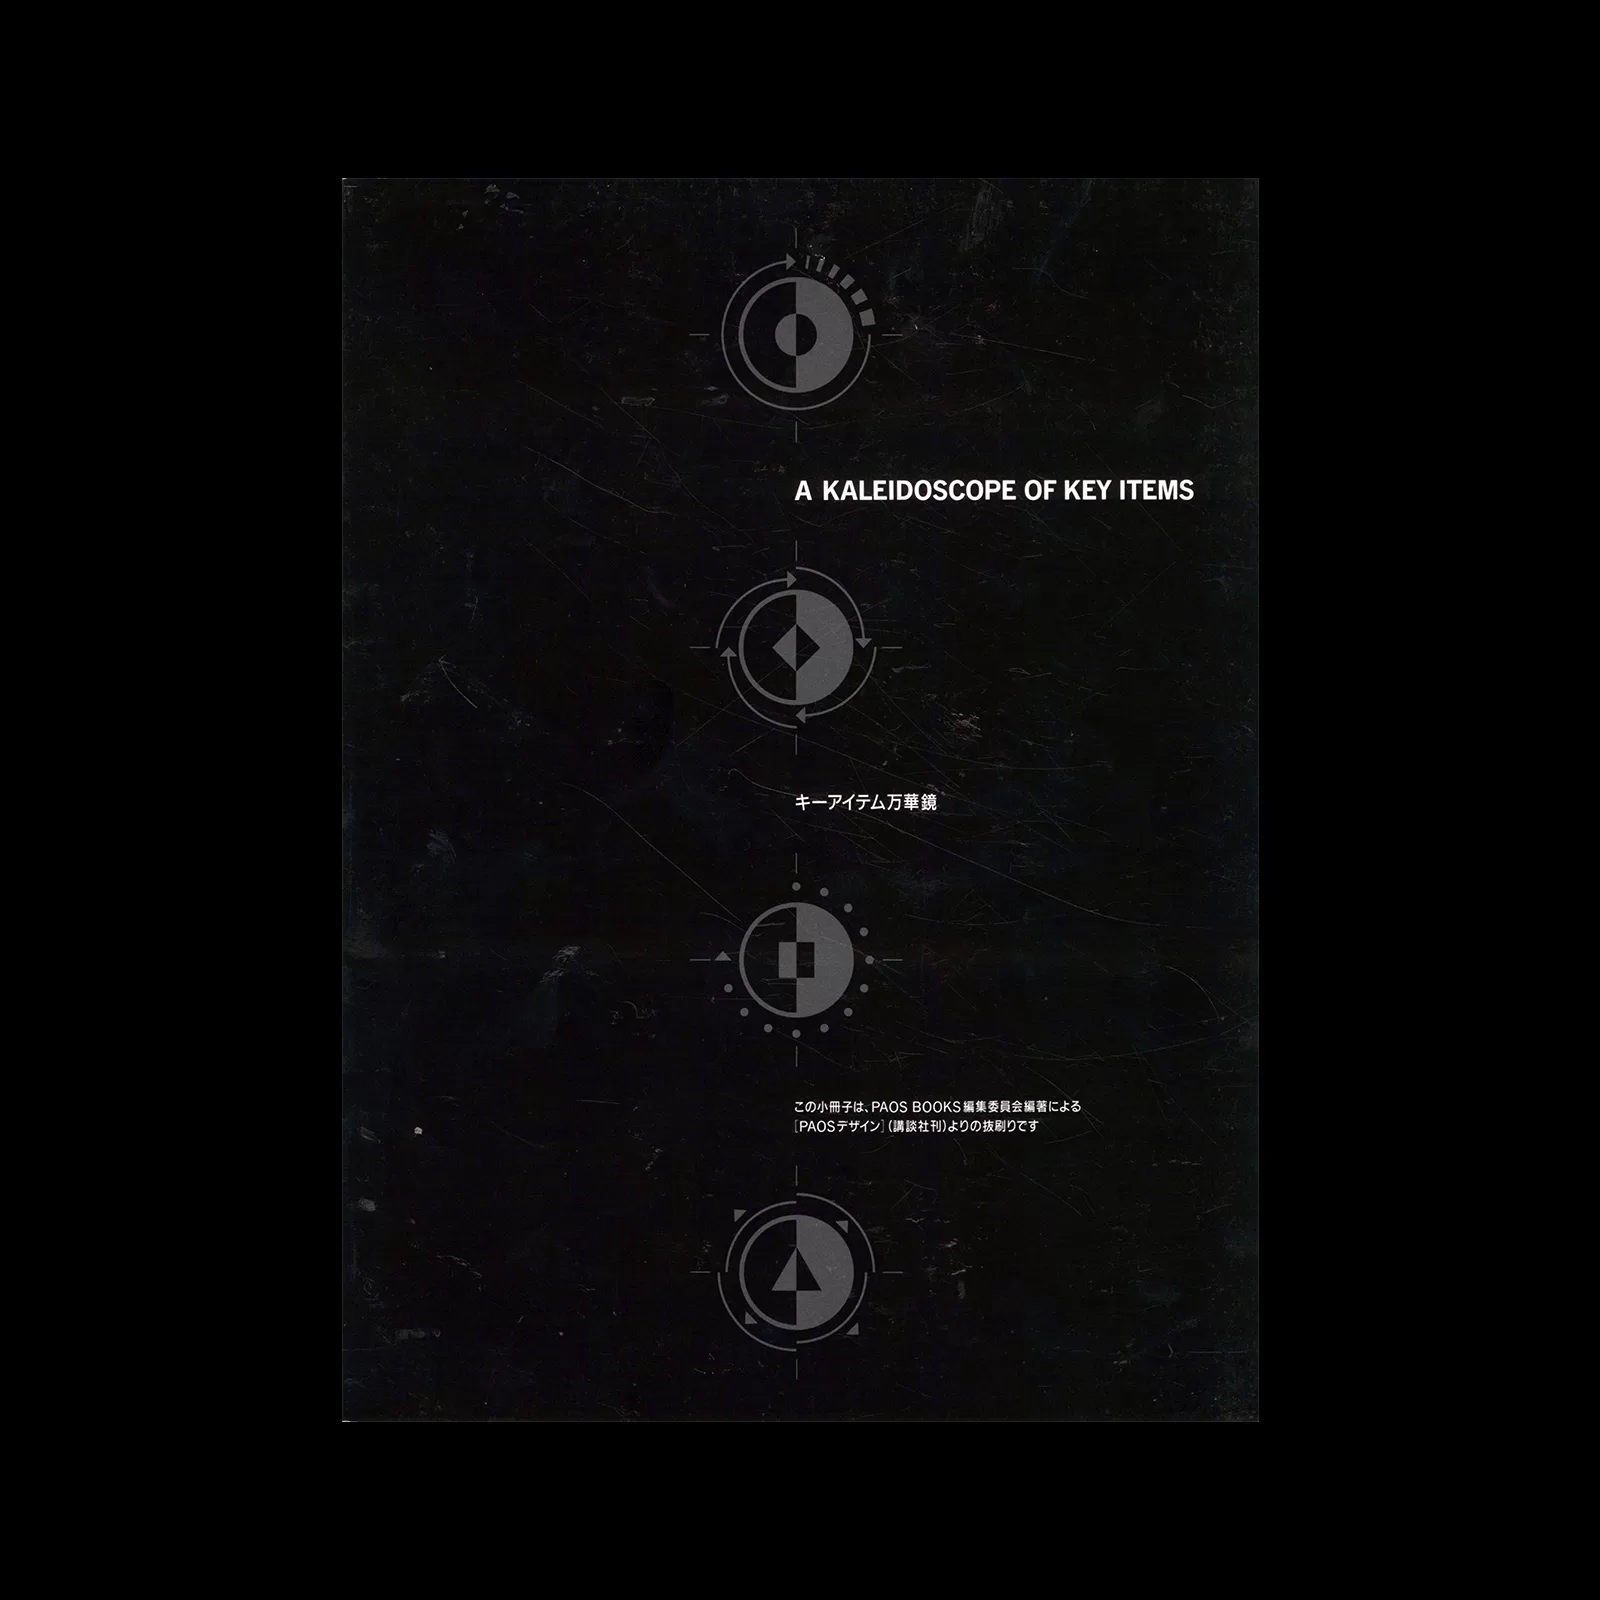 Key item kaleidoscope - PAOS Design, [The World of Corporate Beauty], CI Design, (23 Book Set), 1989